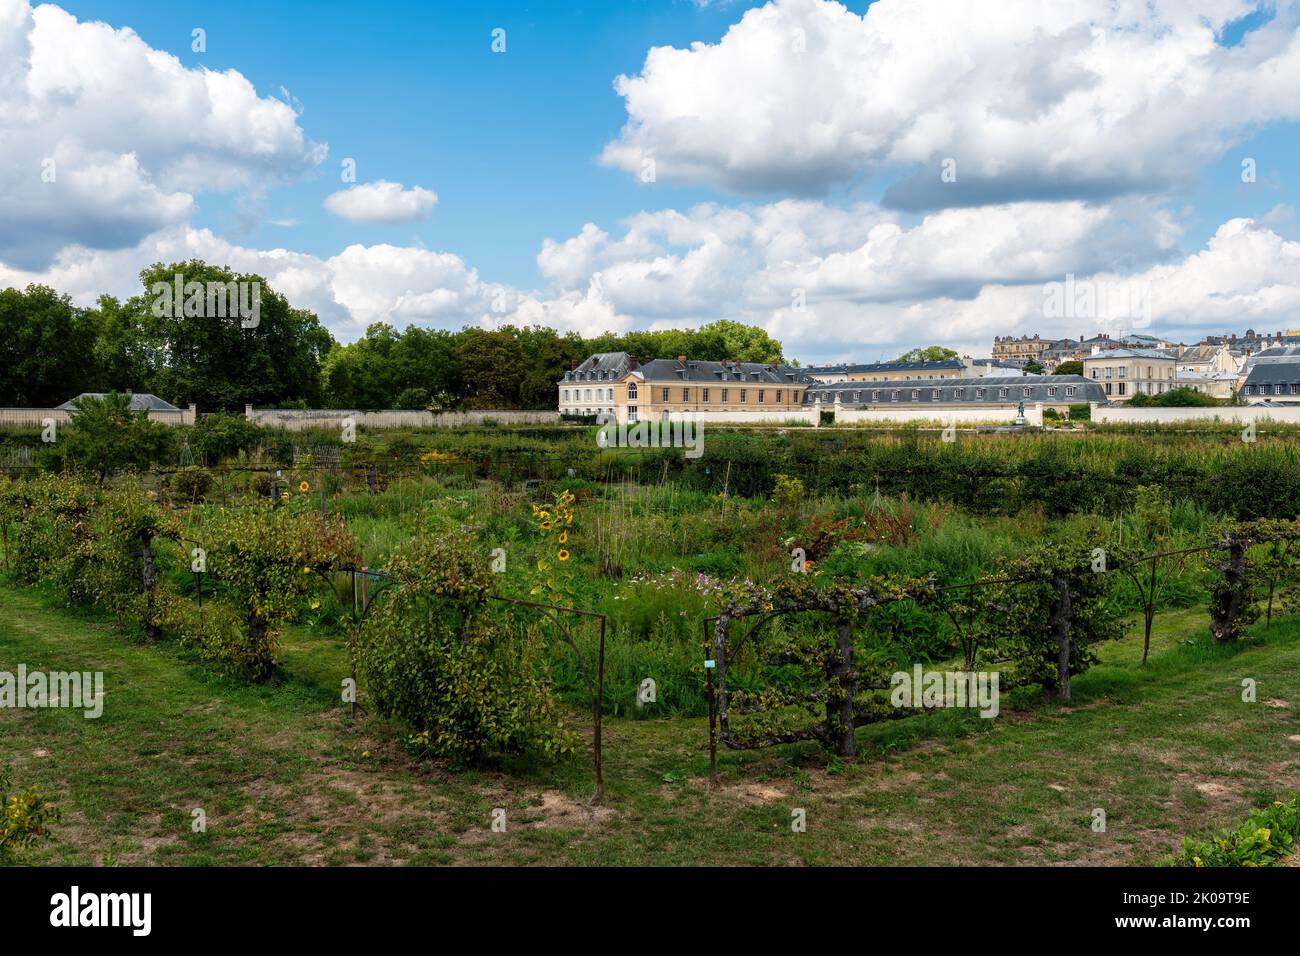 King's Kitchen Garden, Potager du Roi, in Versailles, France Stock Photo